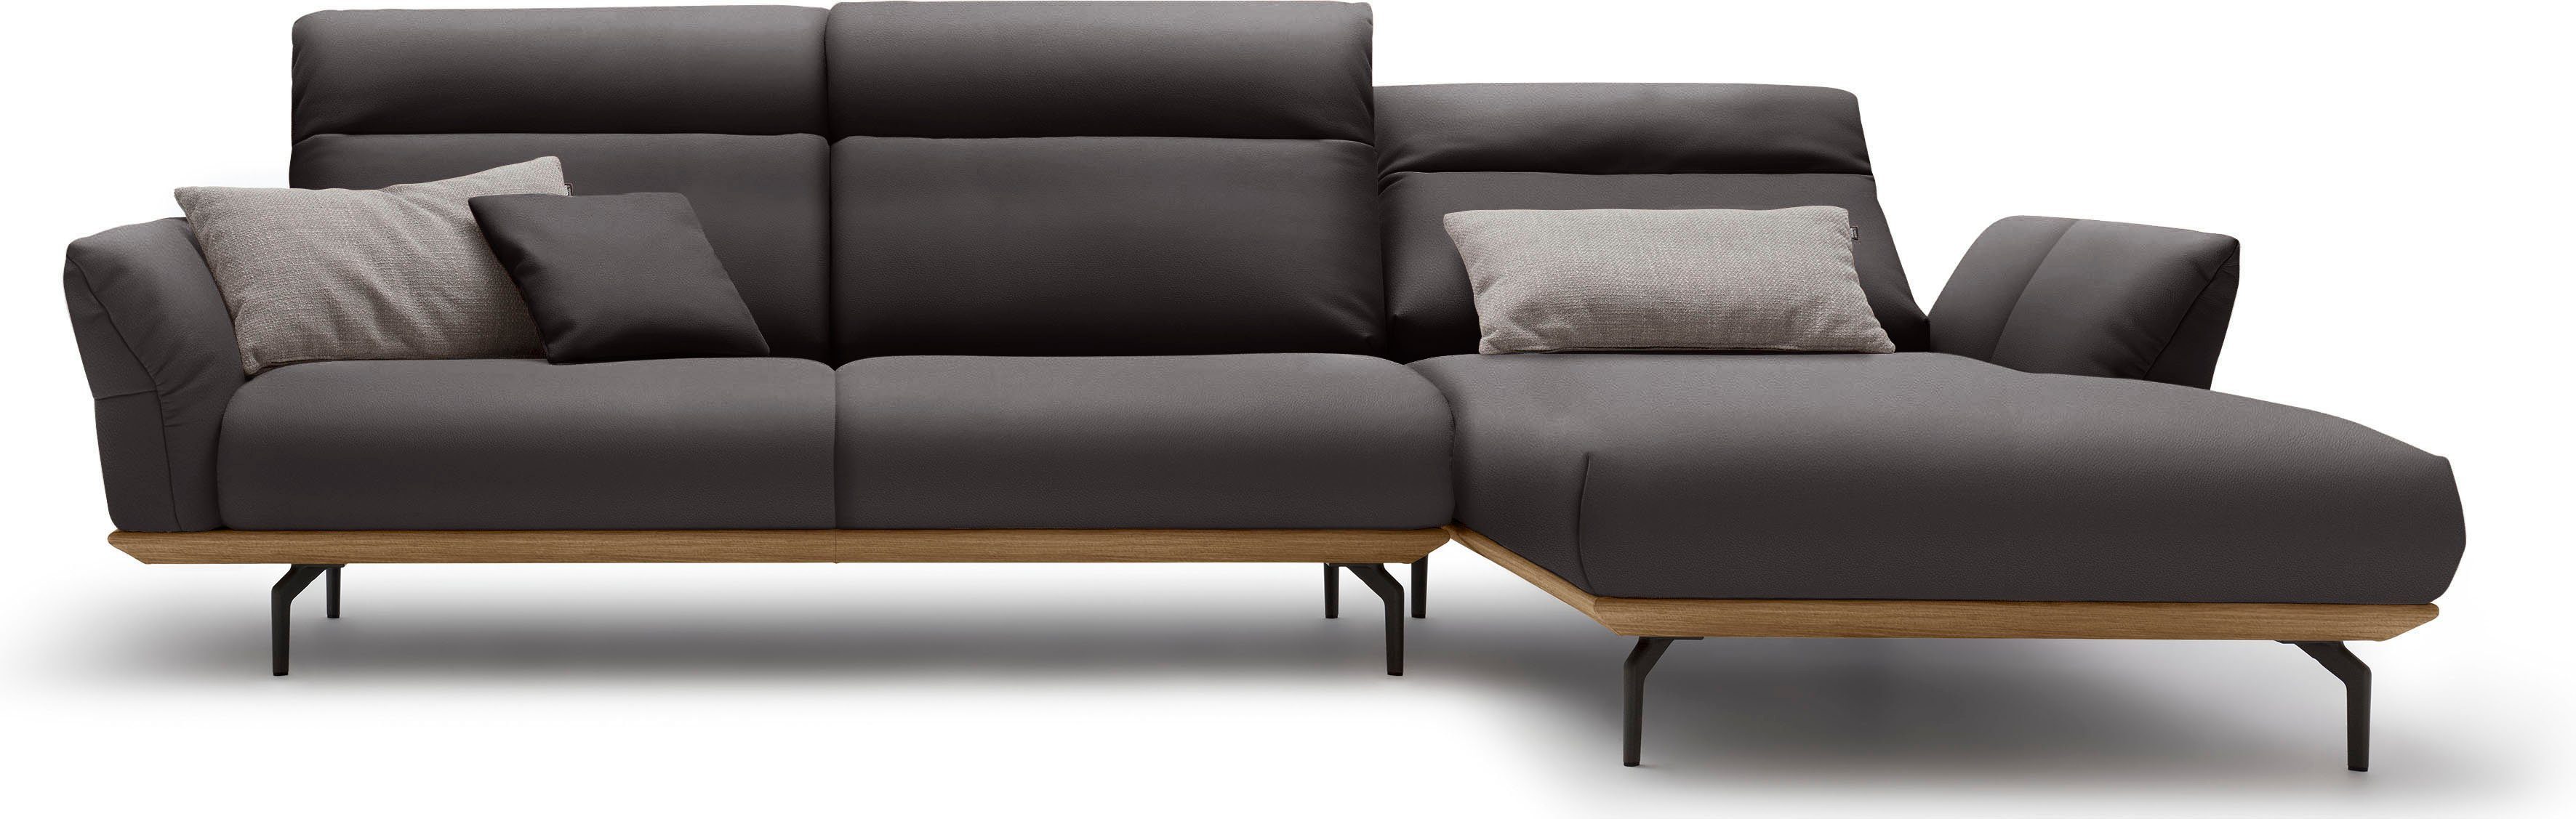 hülsta sofa Ecksofa hs.460, Sockel in Nussbaum, Winkelfüße in Umbragrau, Breite 318 cm | Ecksofas